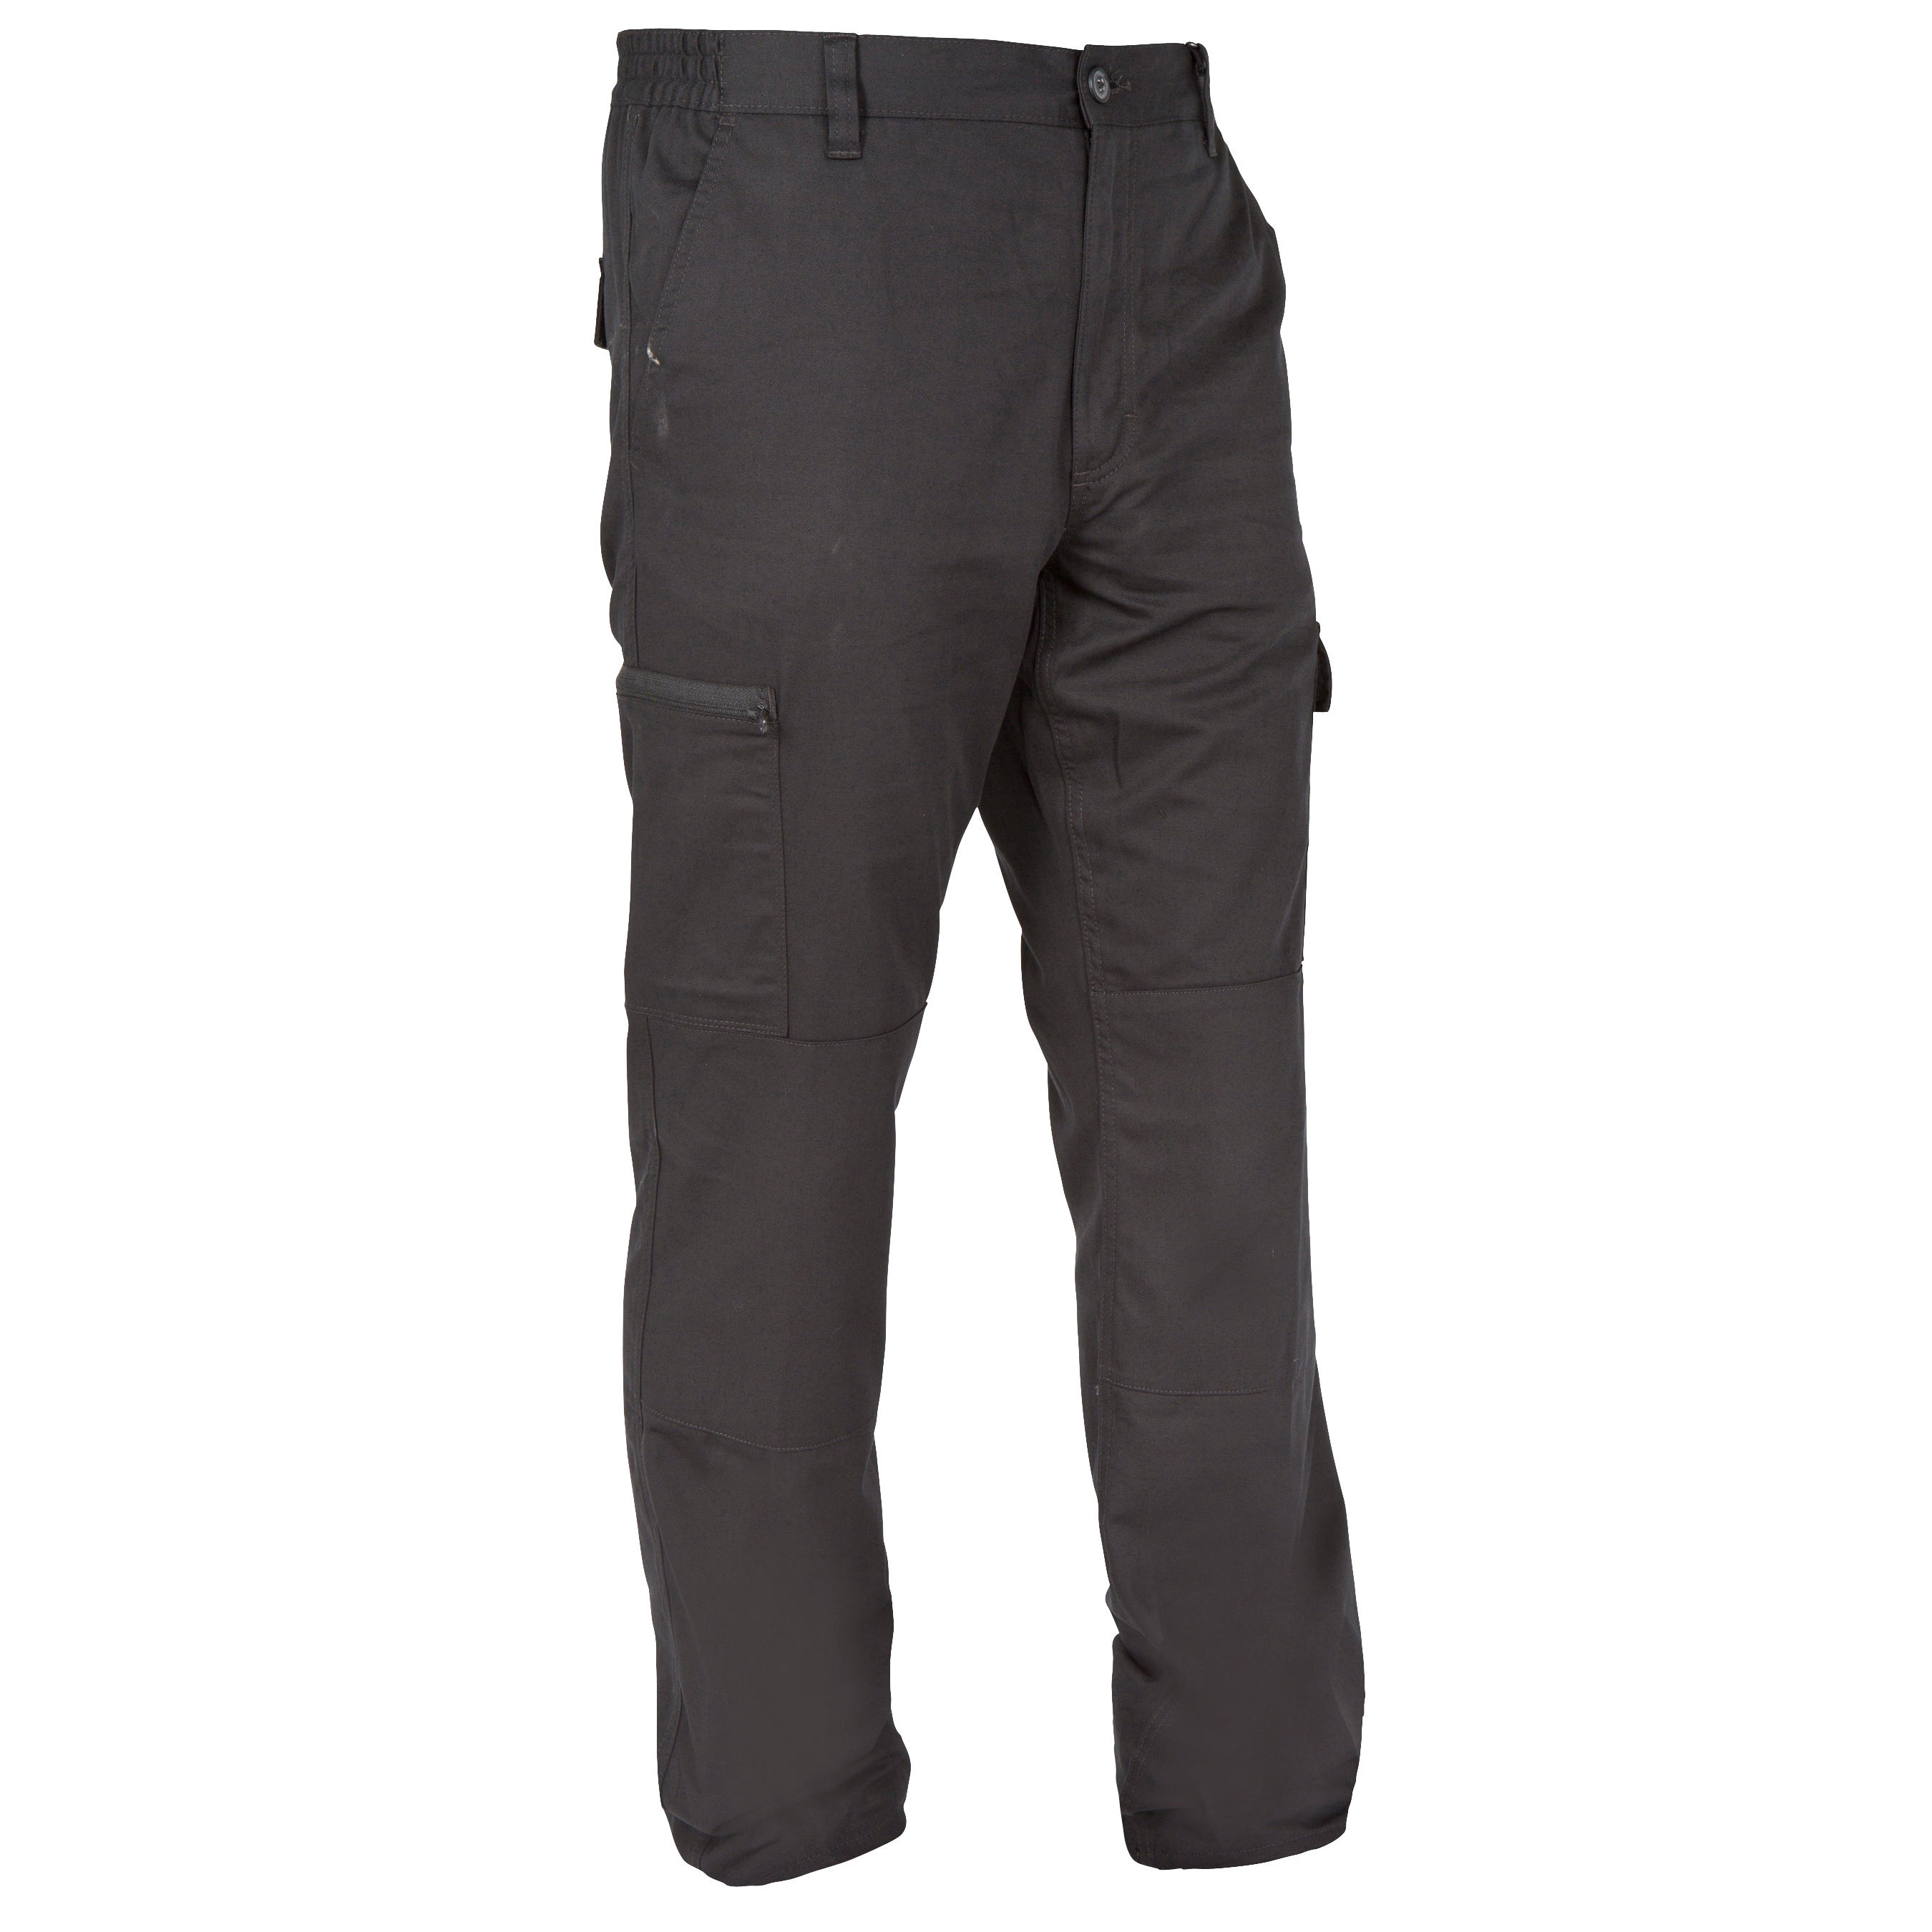 Cargo Pants | Joggers Pants | Cargo & Denim Shorts | Six Pocket Jeans |  Men's Jeans Wholesaler - YouTube